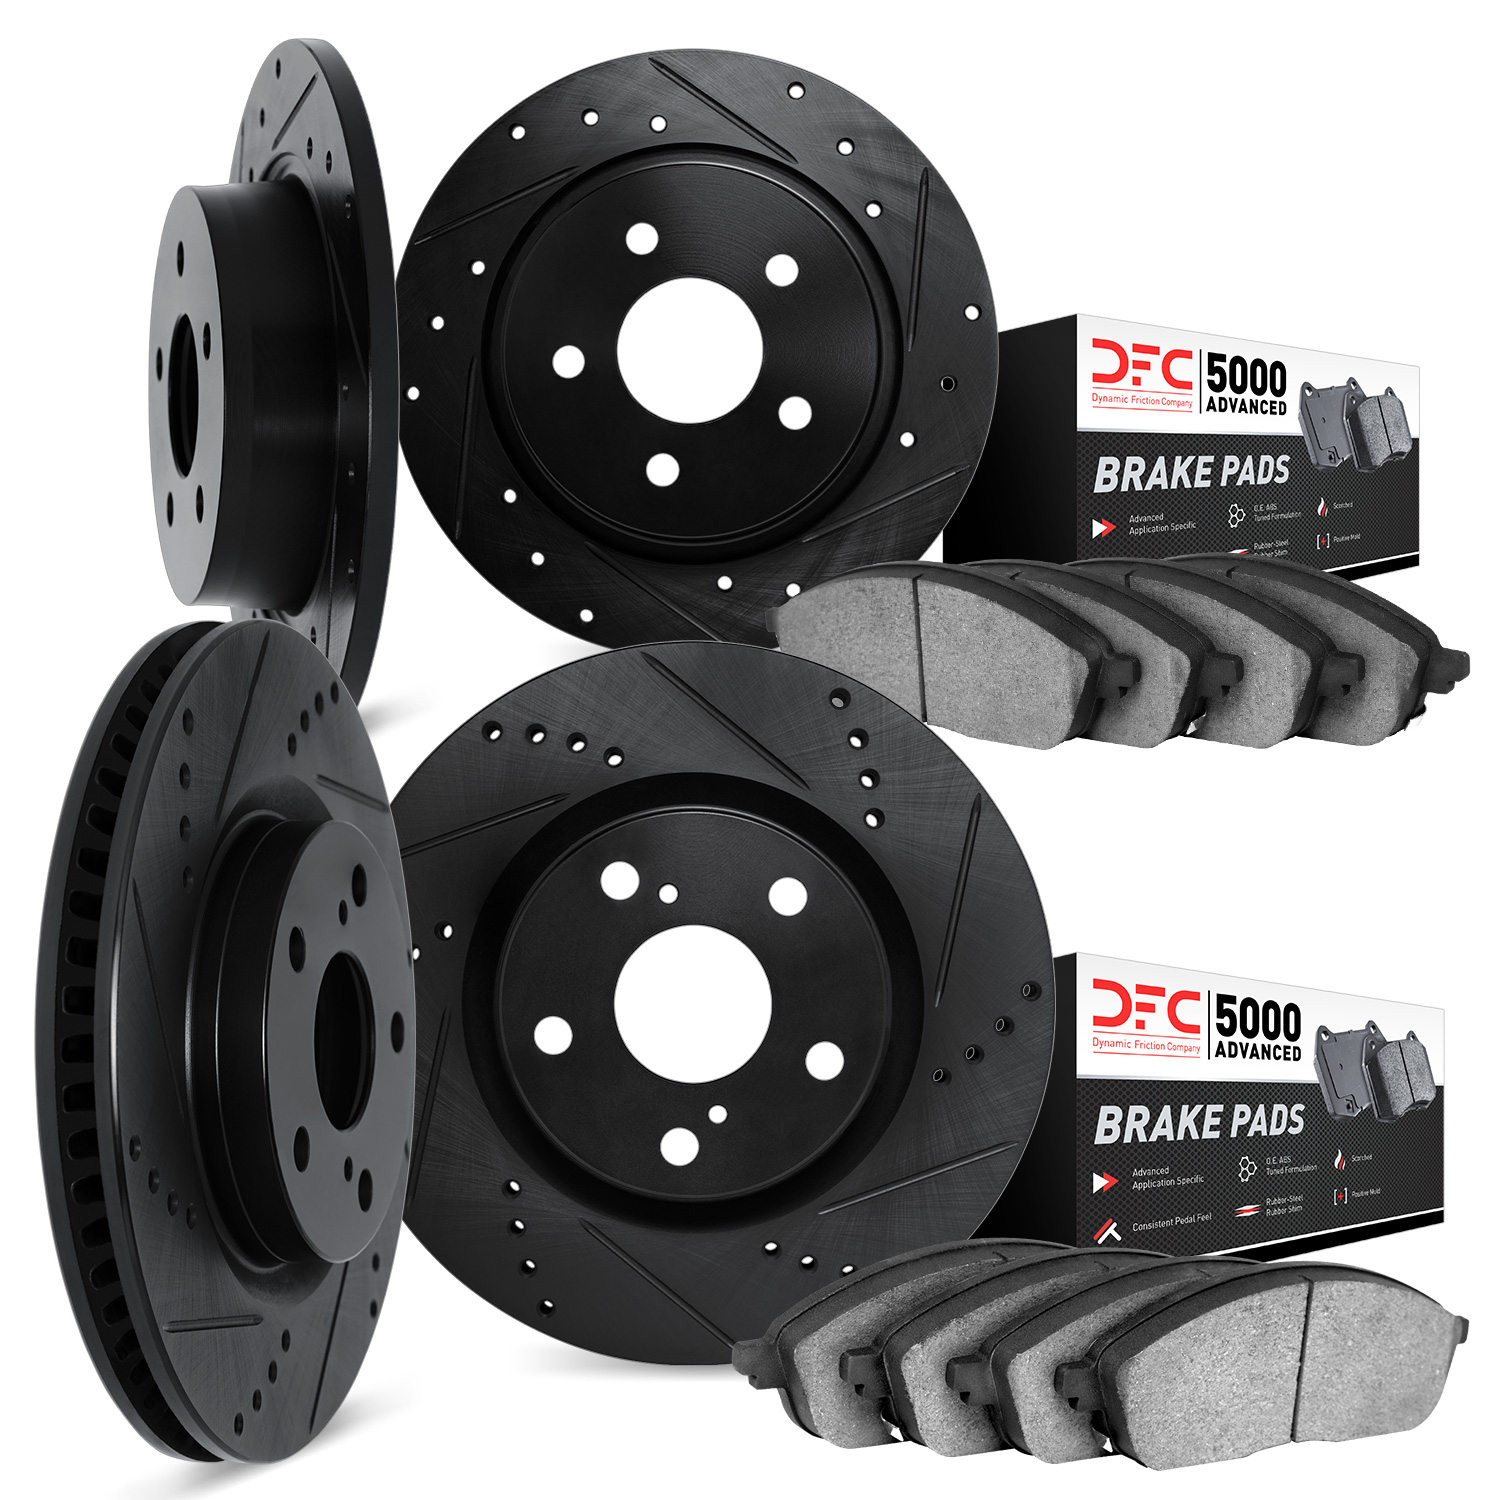 8504-03079 Drilled/Slotted Brake Rotors w/5000 Advanced Brake Pads Kit [Black], Fits Select Kia/Hyundai/Genesis, Position: Front